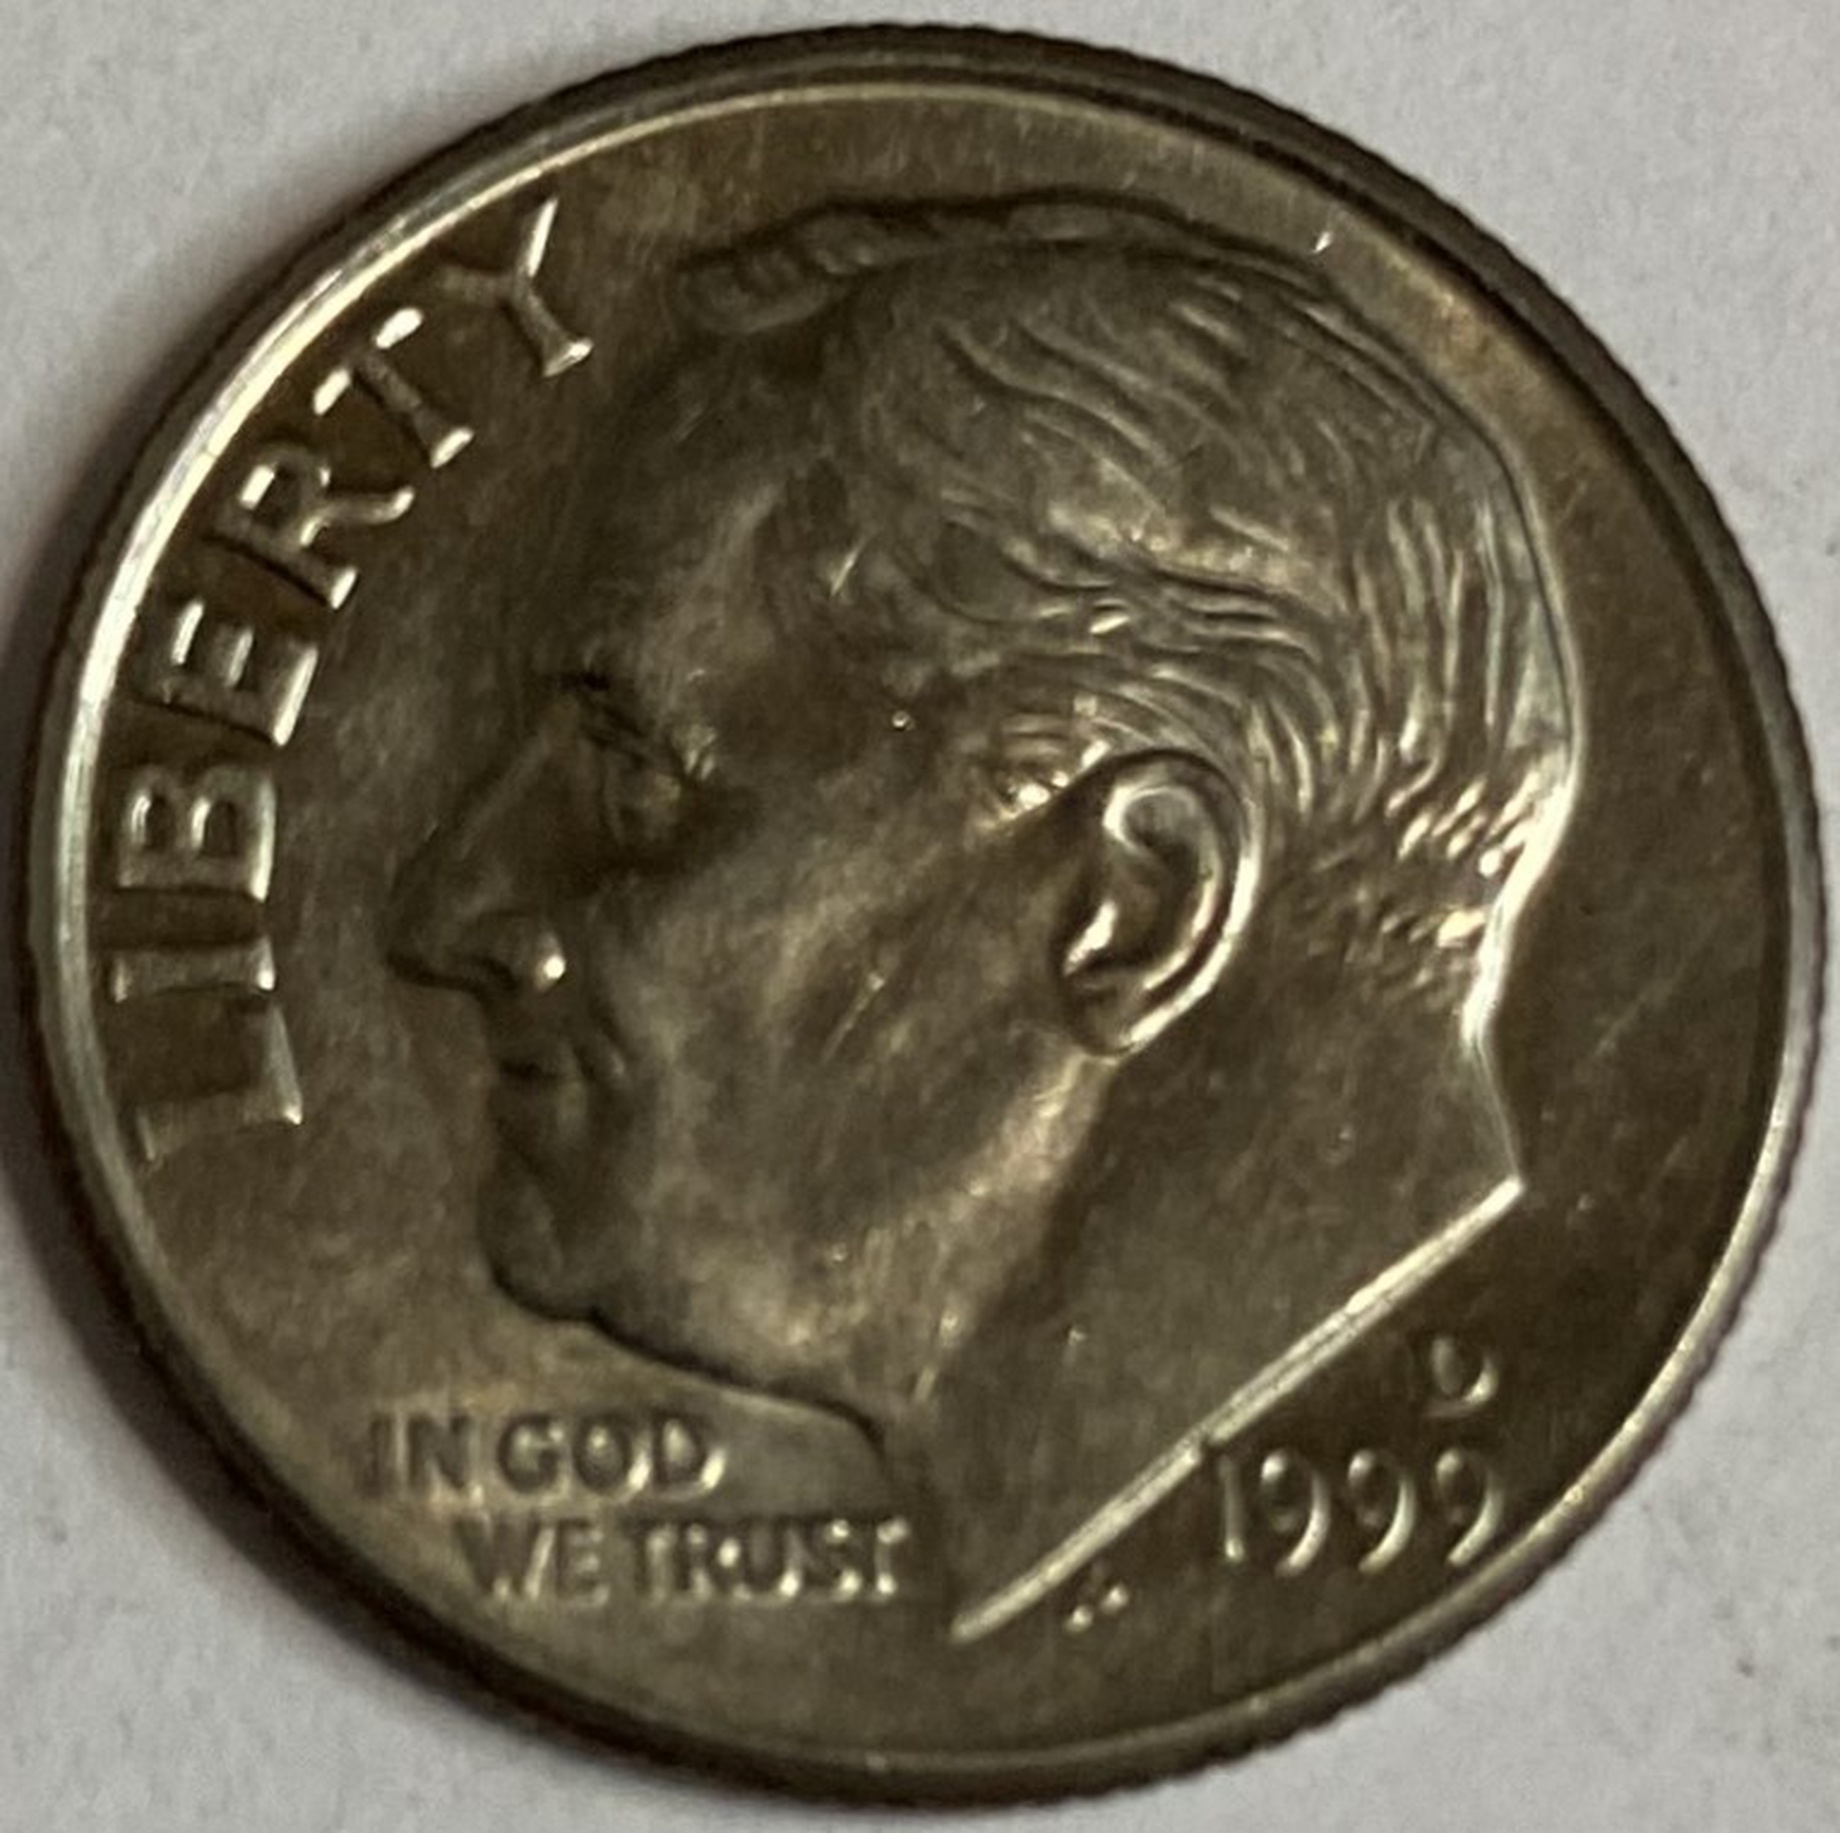 Иностранная монета США 10 центов 1999 год Америка